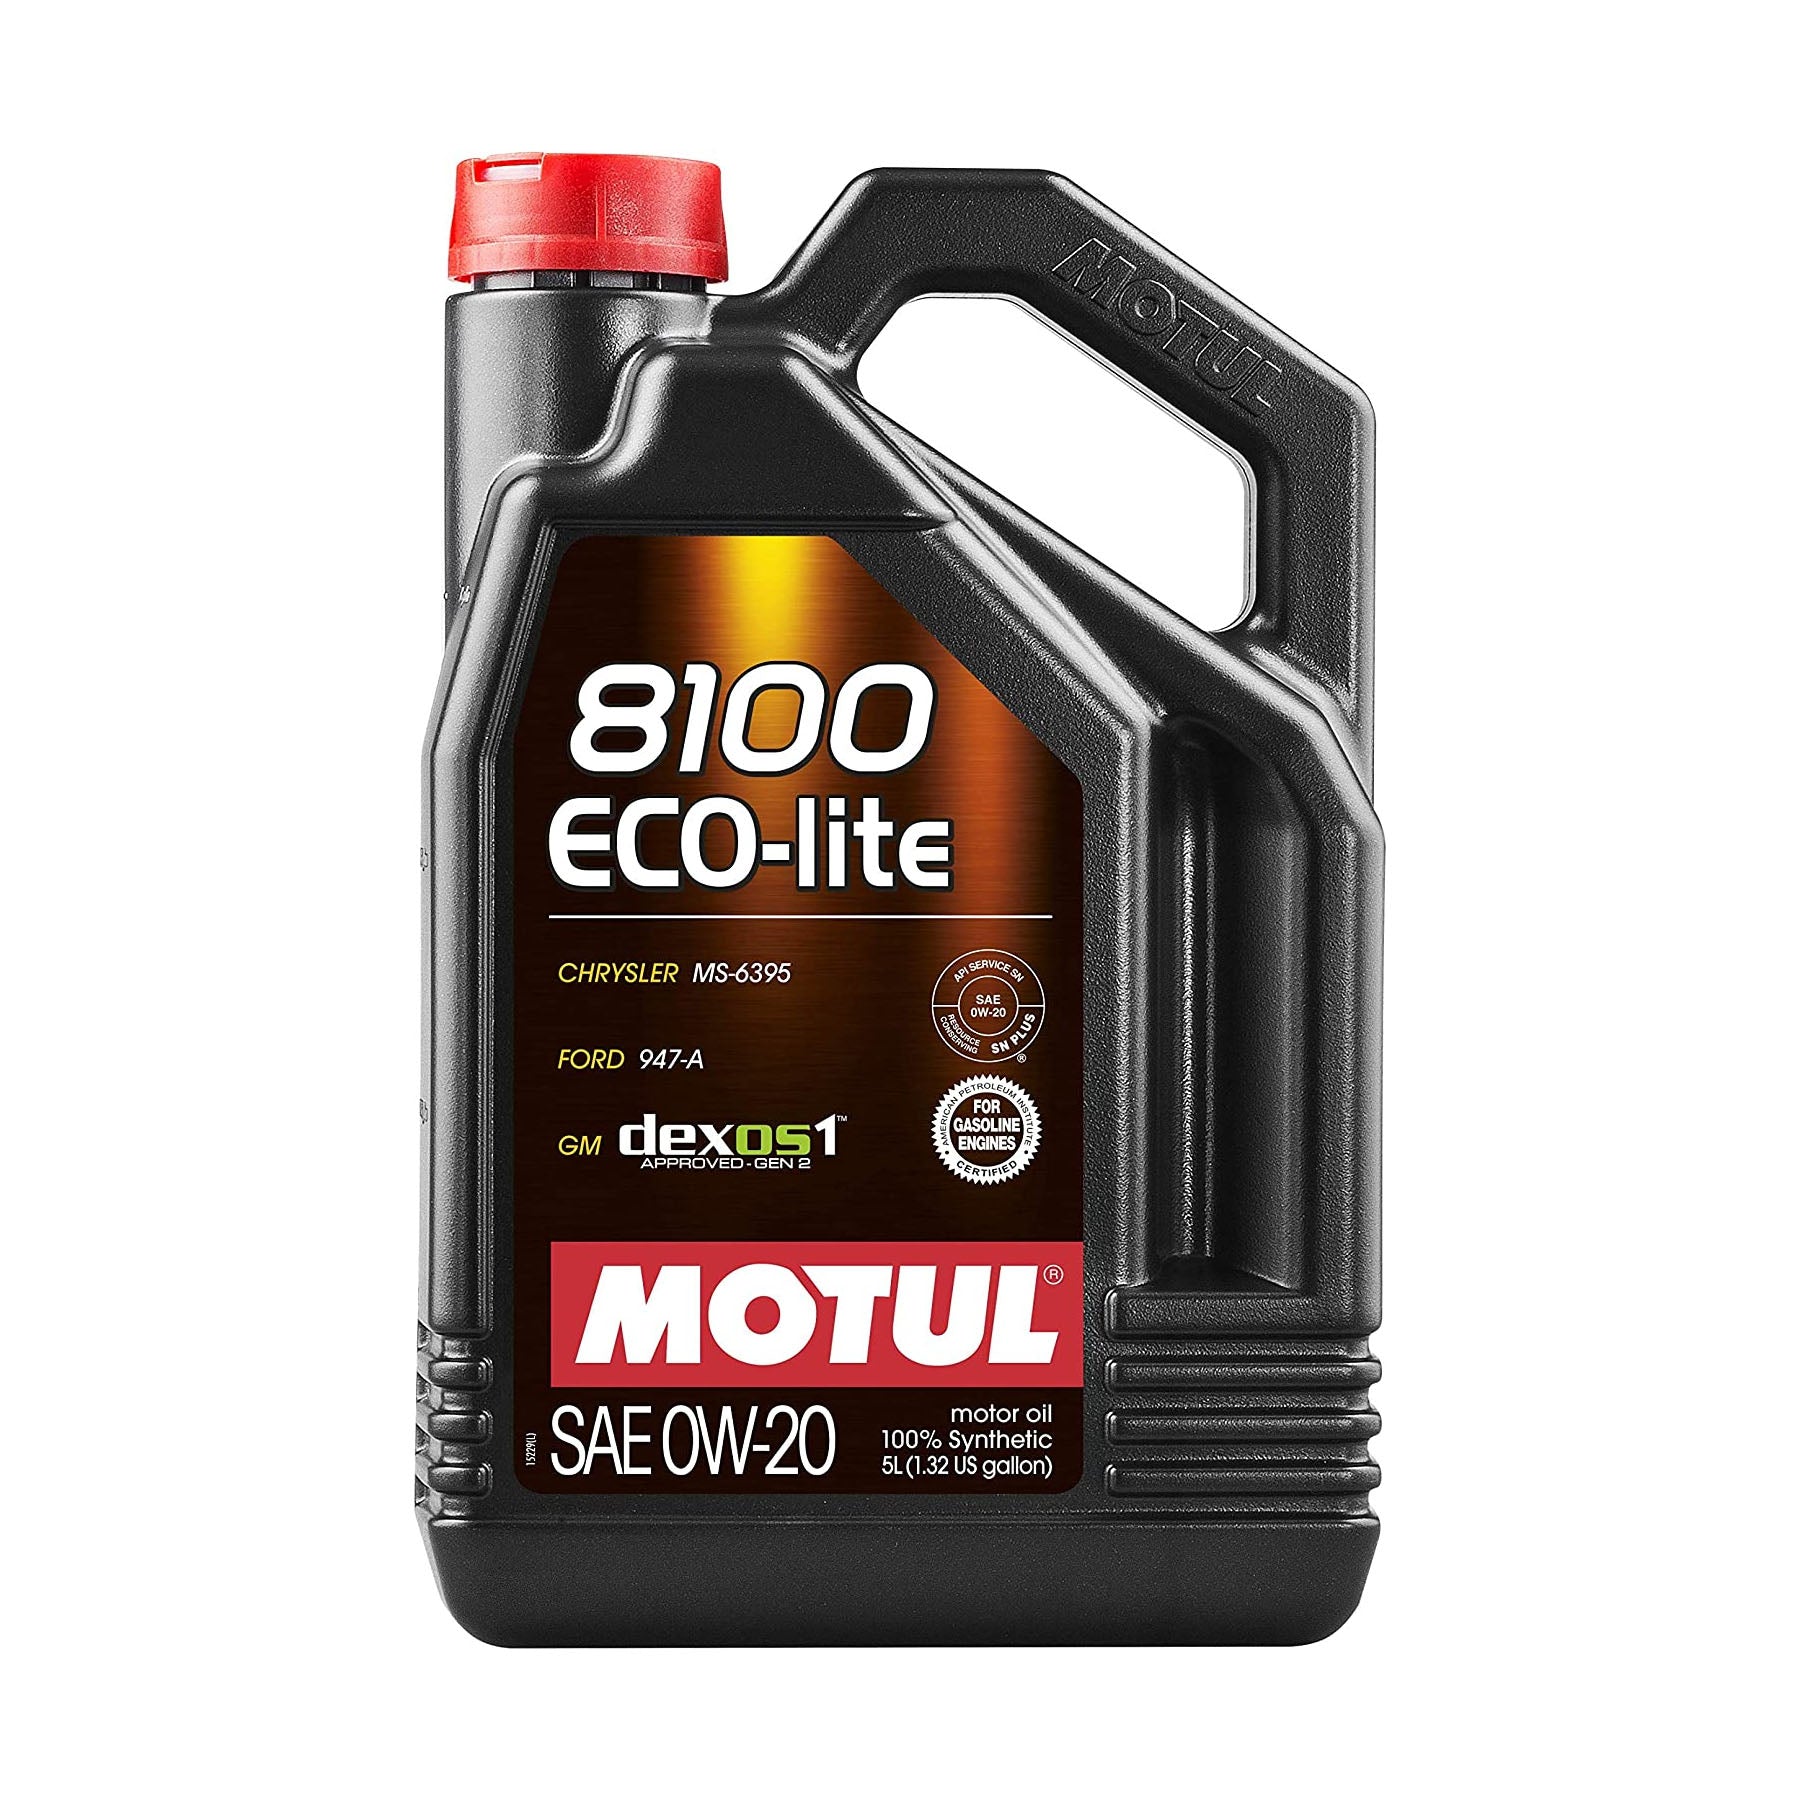 Motul 0W20 ECO-lite Motor Oil 5 Liter Jug